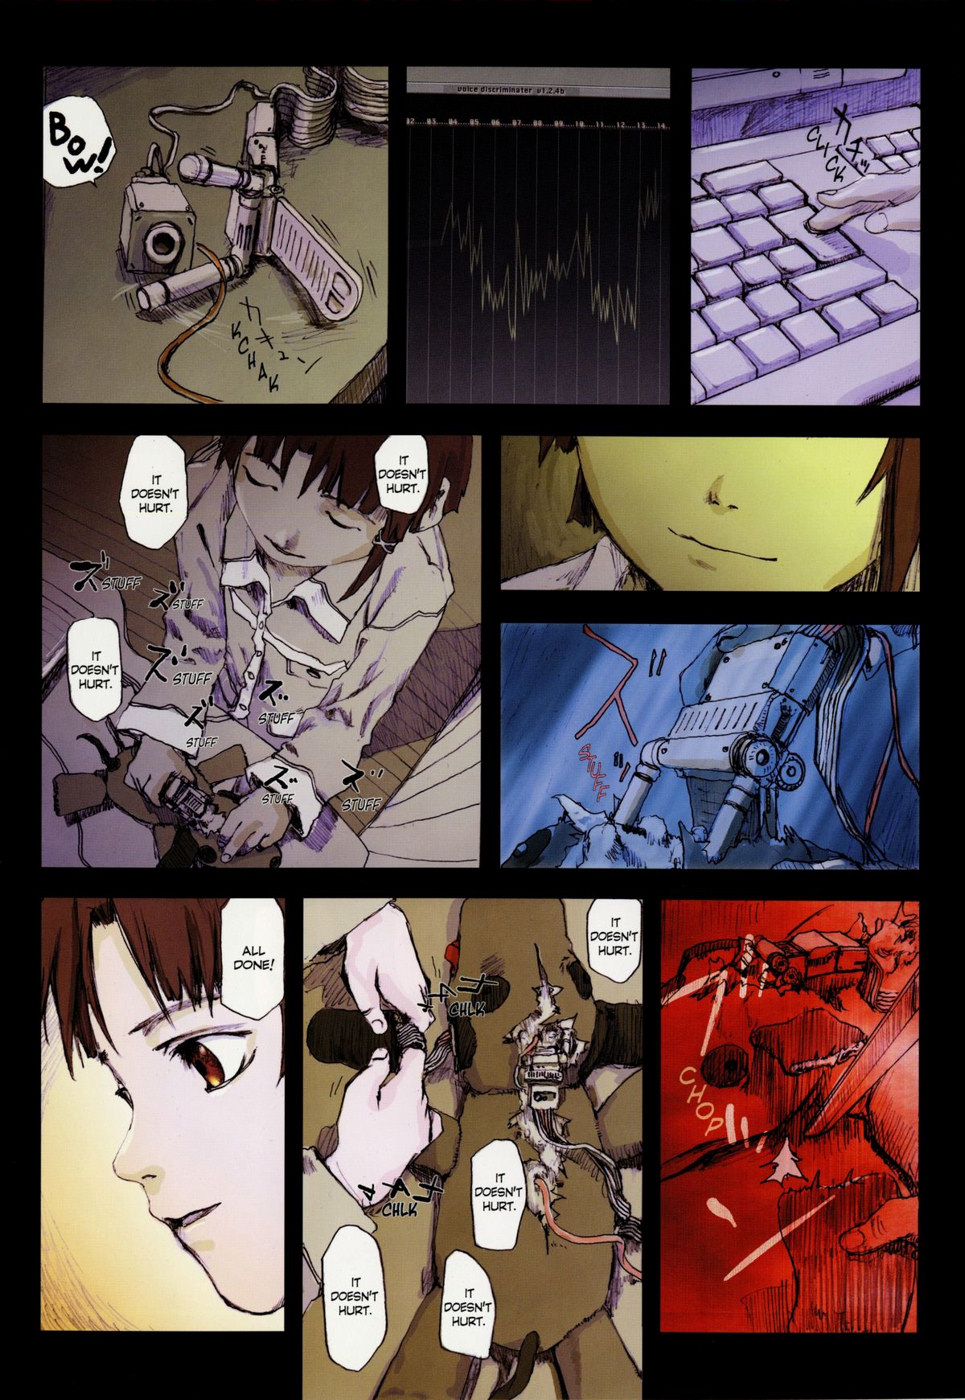 6 serial experiments lain manga эксперименты лэйн манга nightmare of fabrication english кошмар подделки